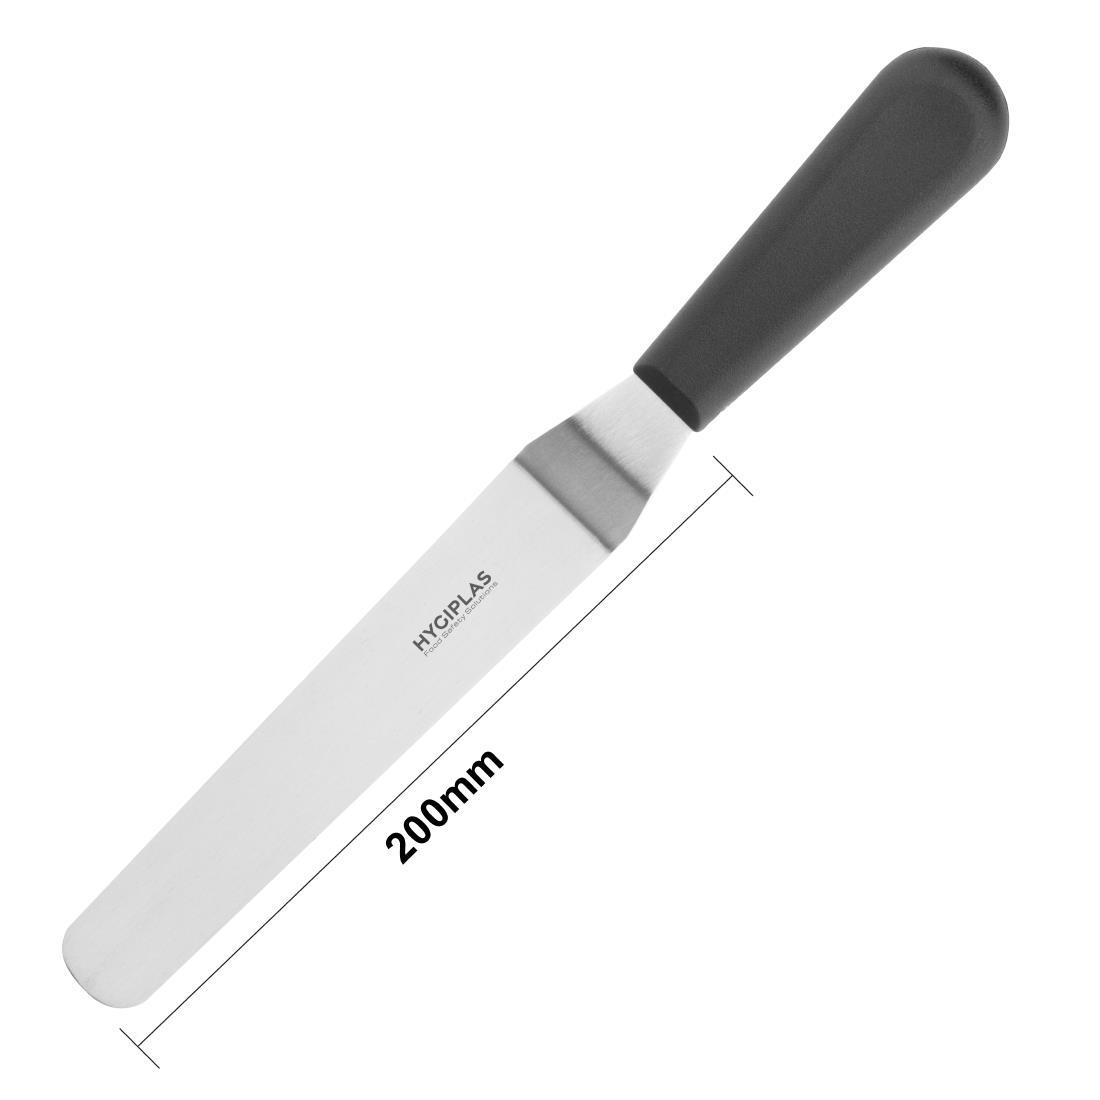 Hygiplas Angled Blade Palette Knife Black 10cm - D420  - 5